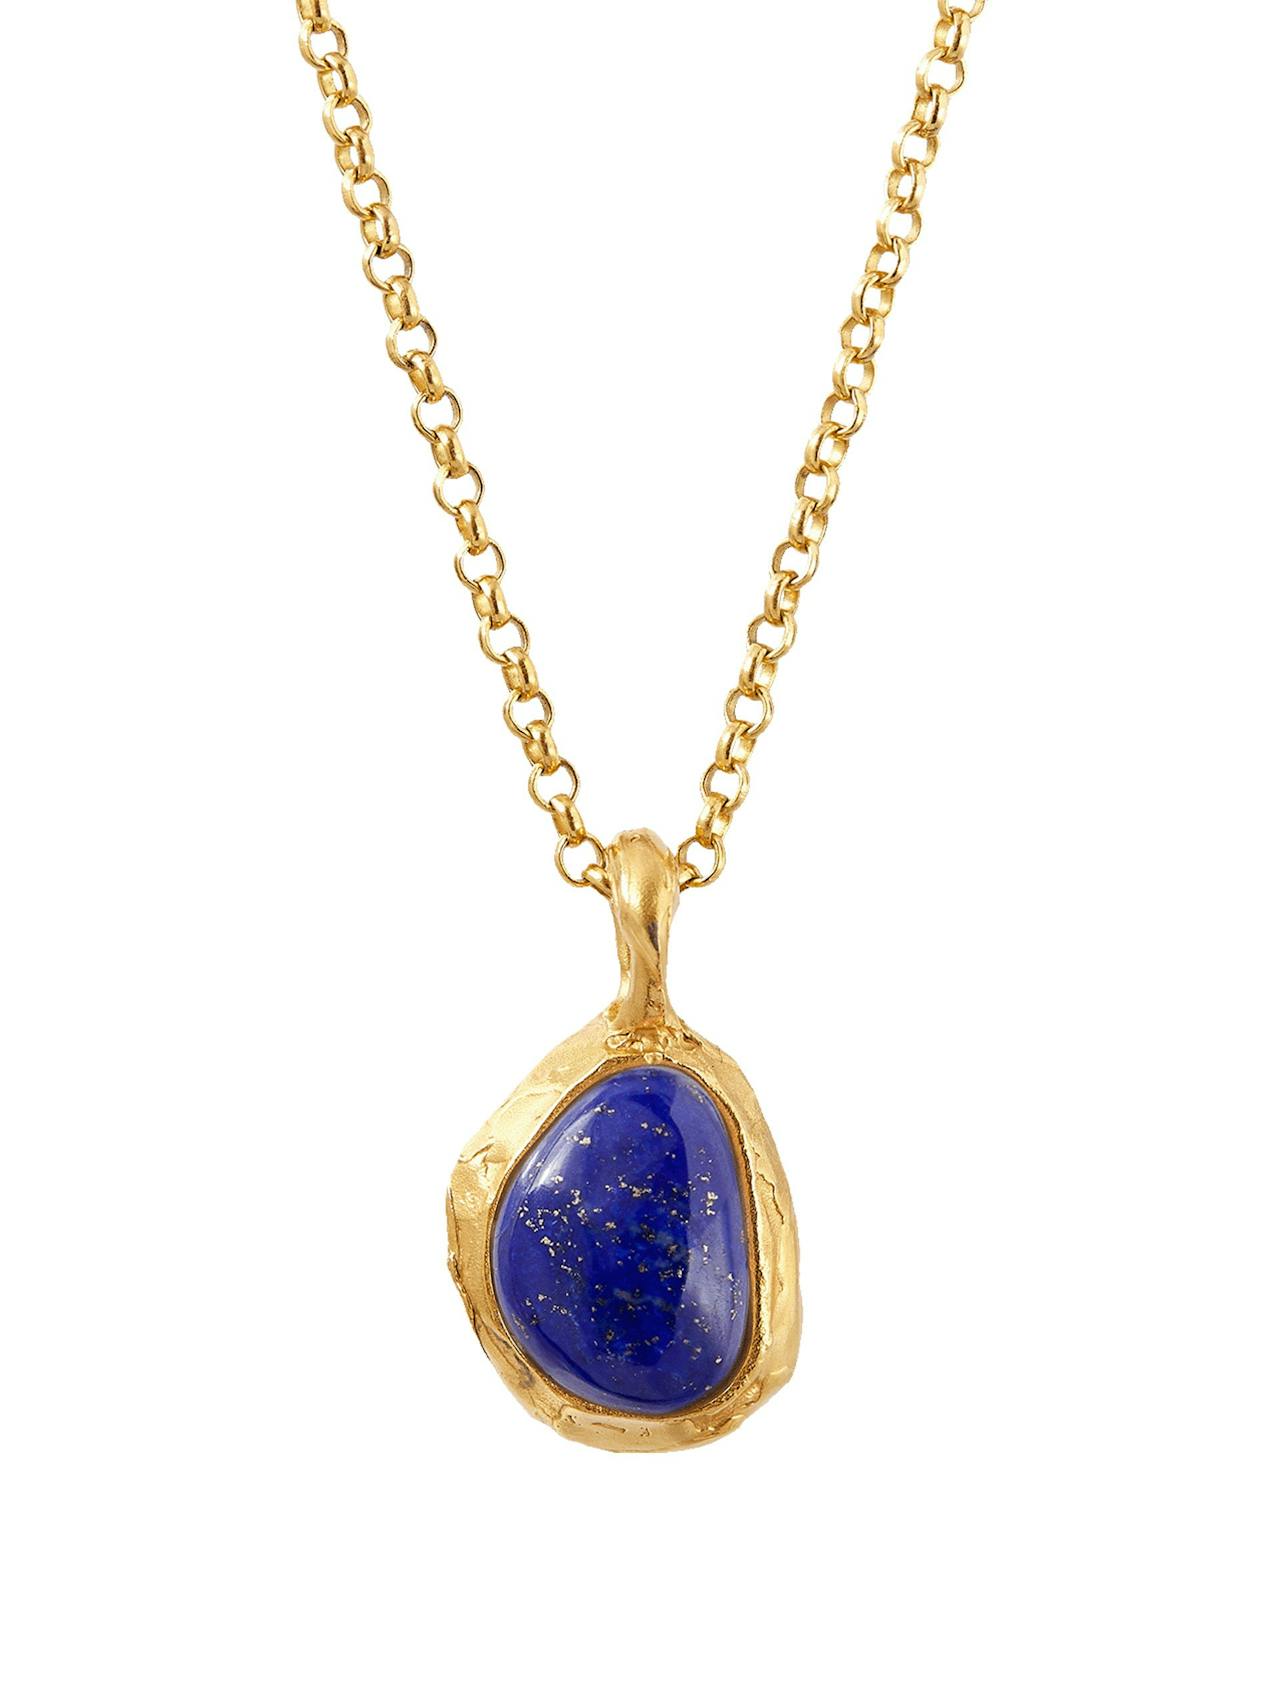 The Droplet of the Horizon Lapis Lazuli necklace